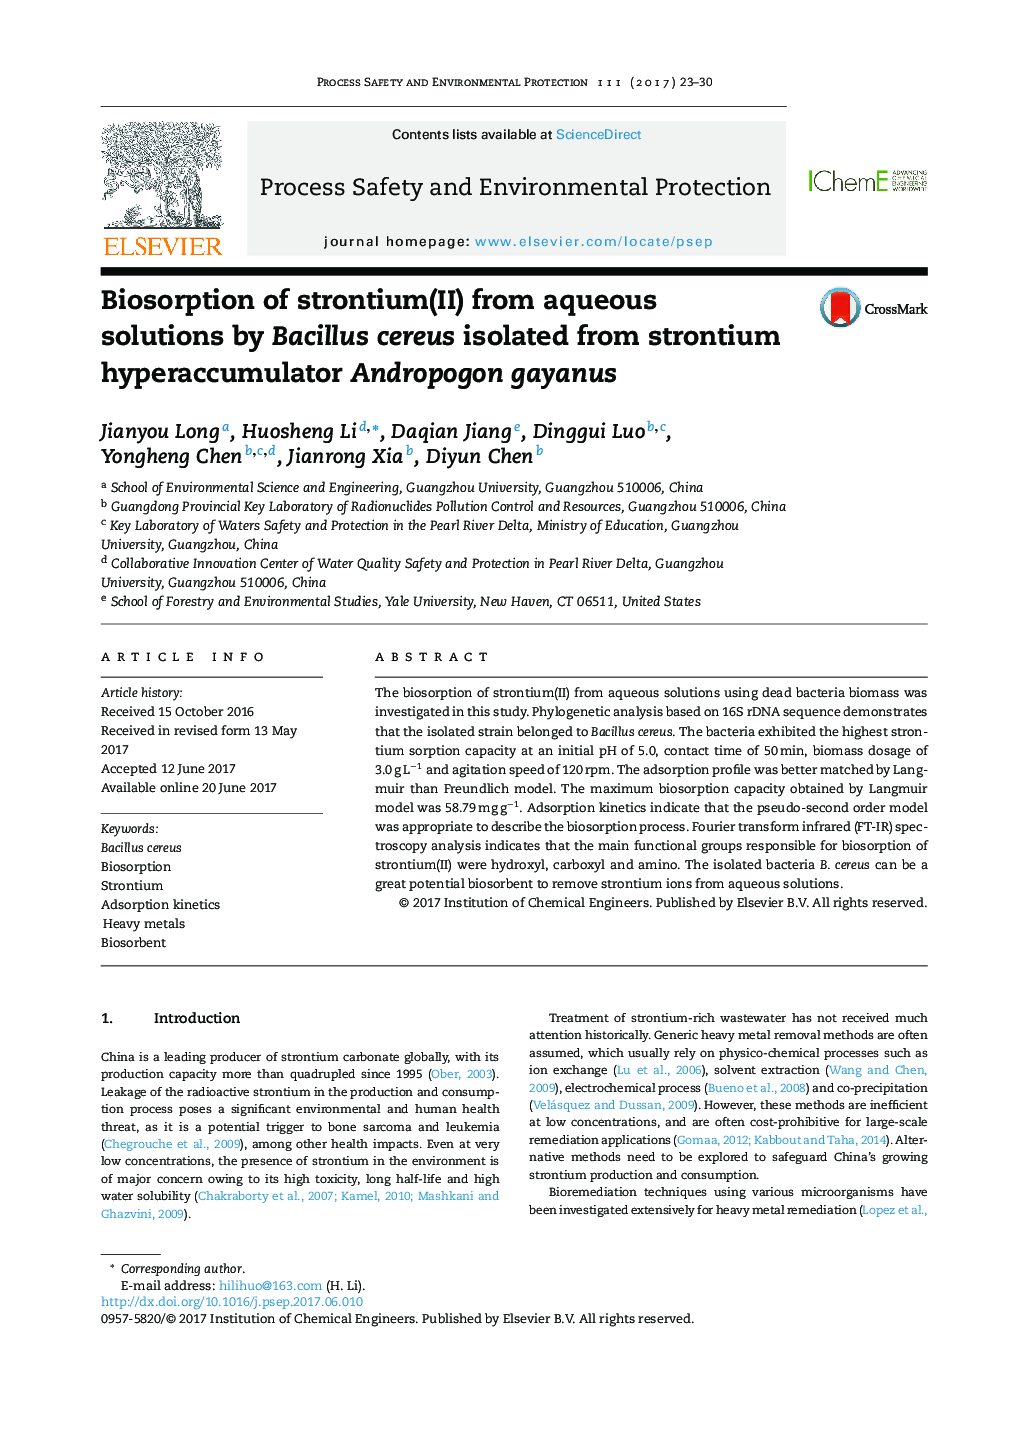 Biosorption of strontium(II) from aqueous solutions by Bacillus cereus isolated from strontium hyperaccumulator Andropogon gayanus